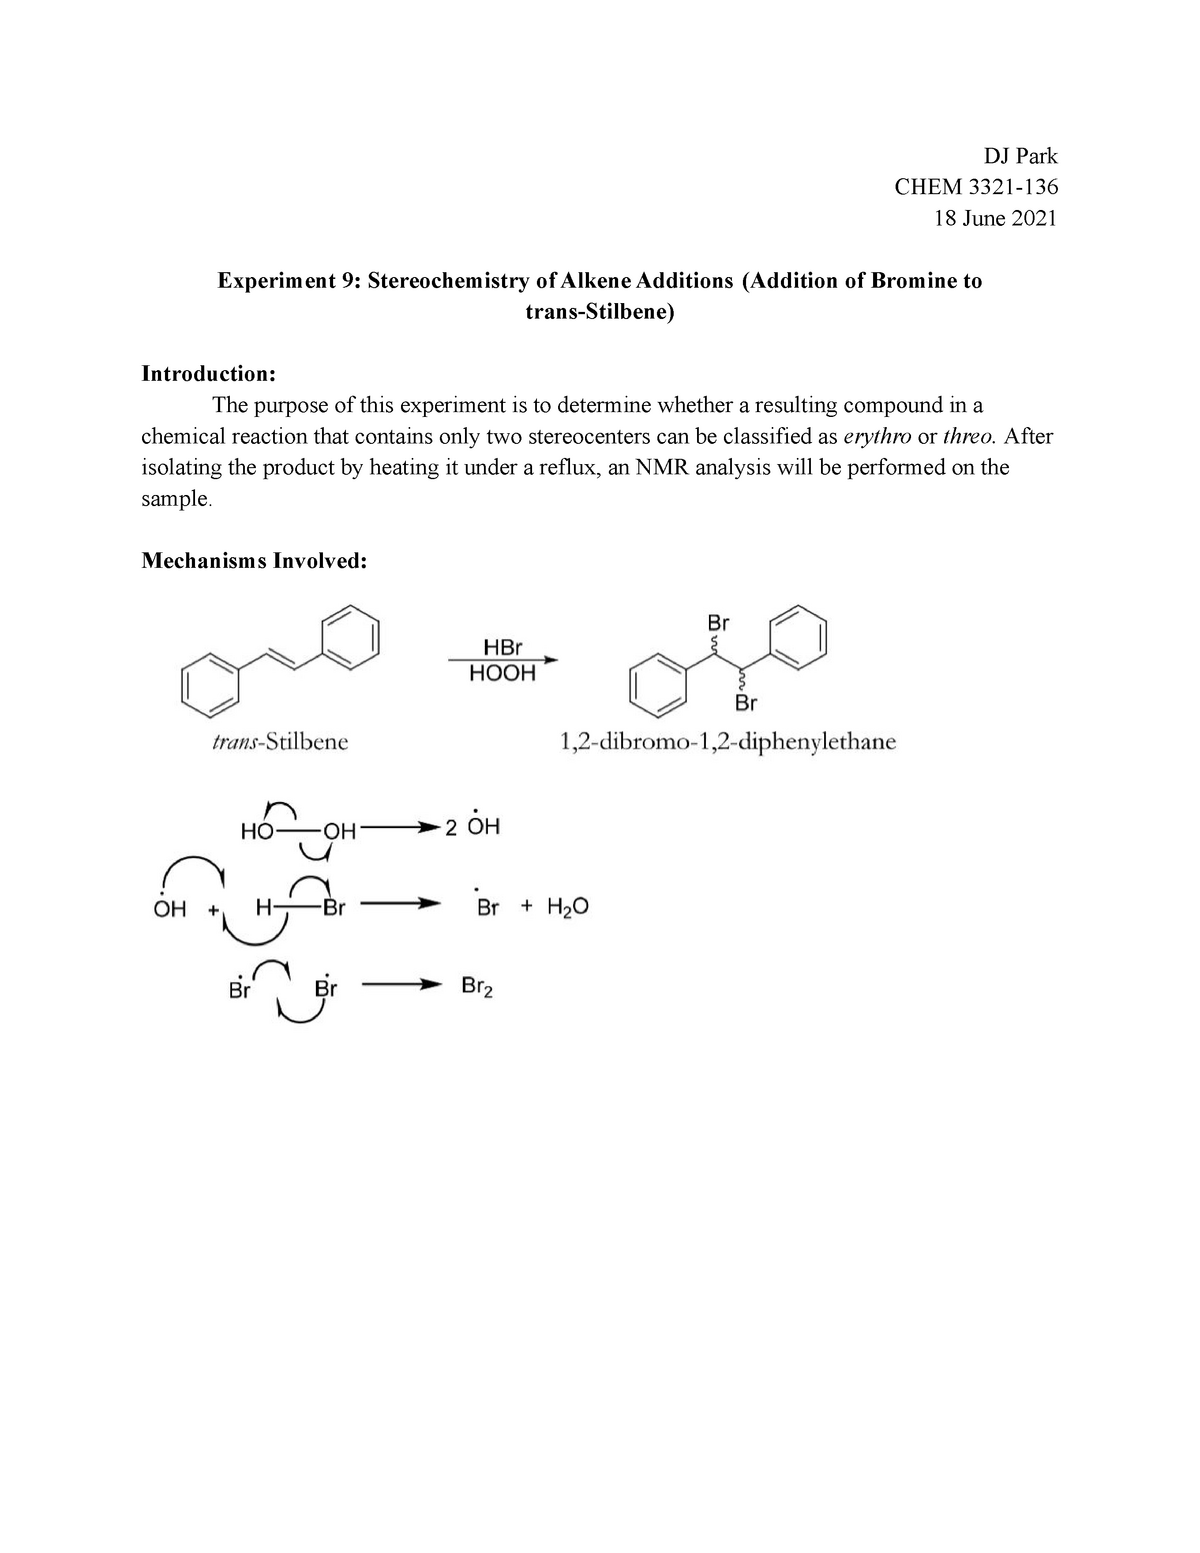 stereochemistry-of-alkene-additions-prelab-handdrawn-fixed-dj-park-chem-3321-18-june-2021